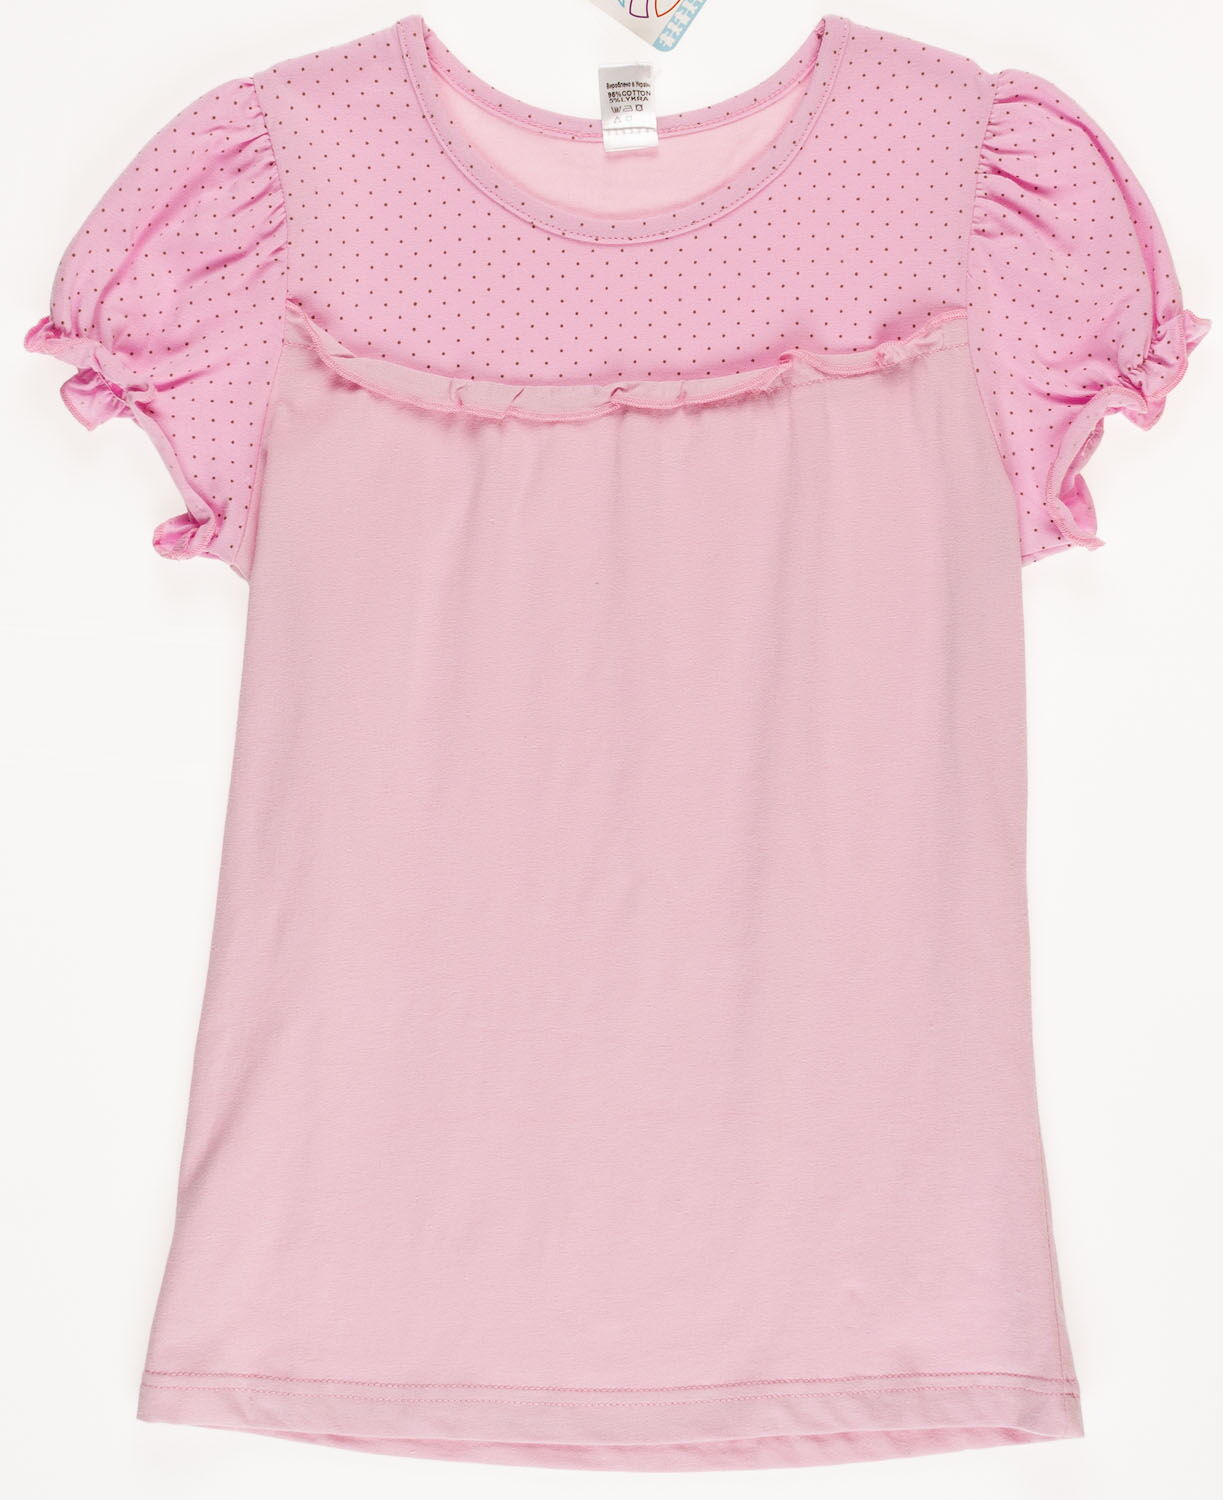 Блузка трикотажная с коротким рукавом Valeri tex розовая 1712-99-042 - цена